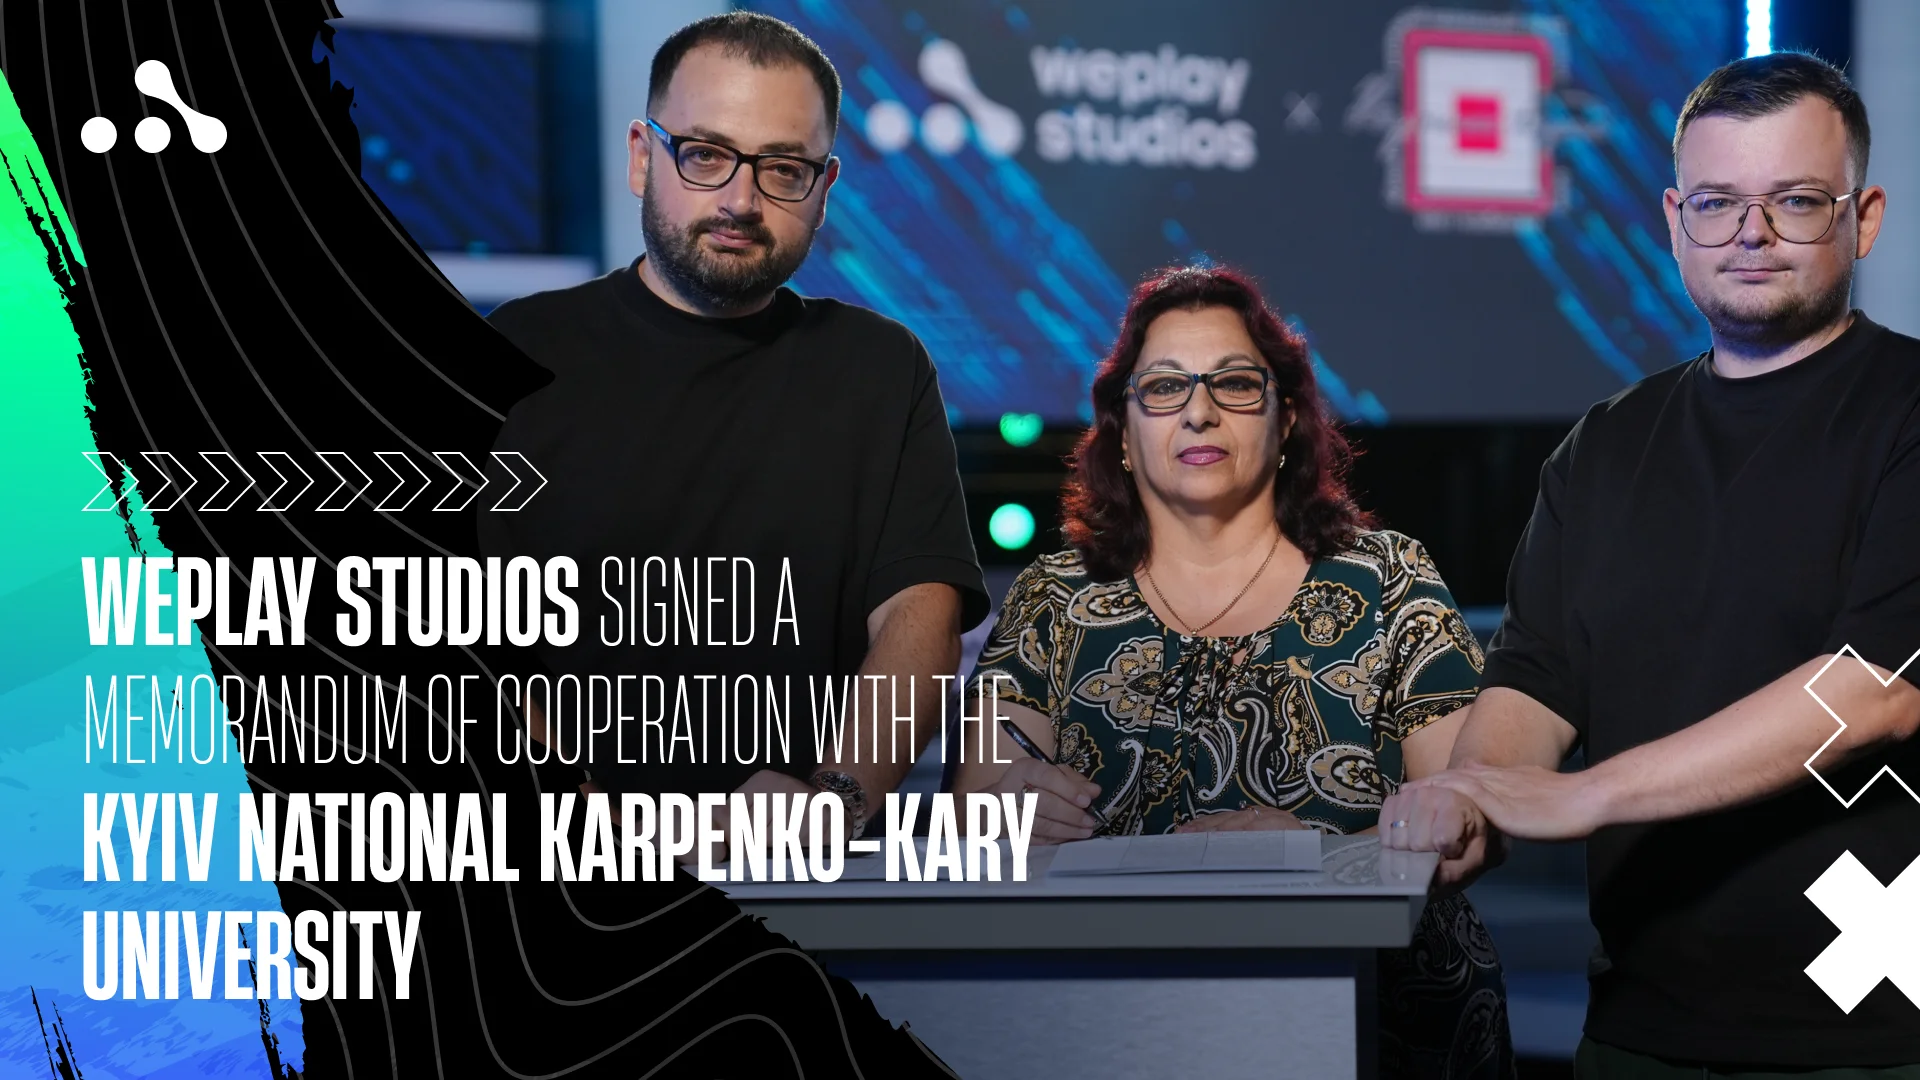 WePlay Studios signs a memorandum of cooperation with Kyiv National Karpenko-Kary University. Visual: WePlay Studios